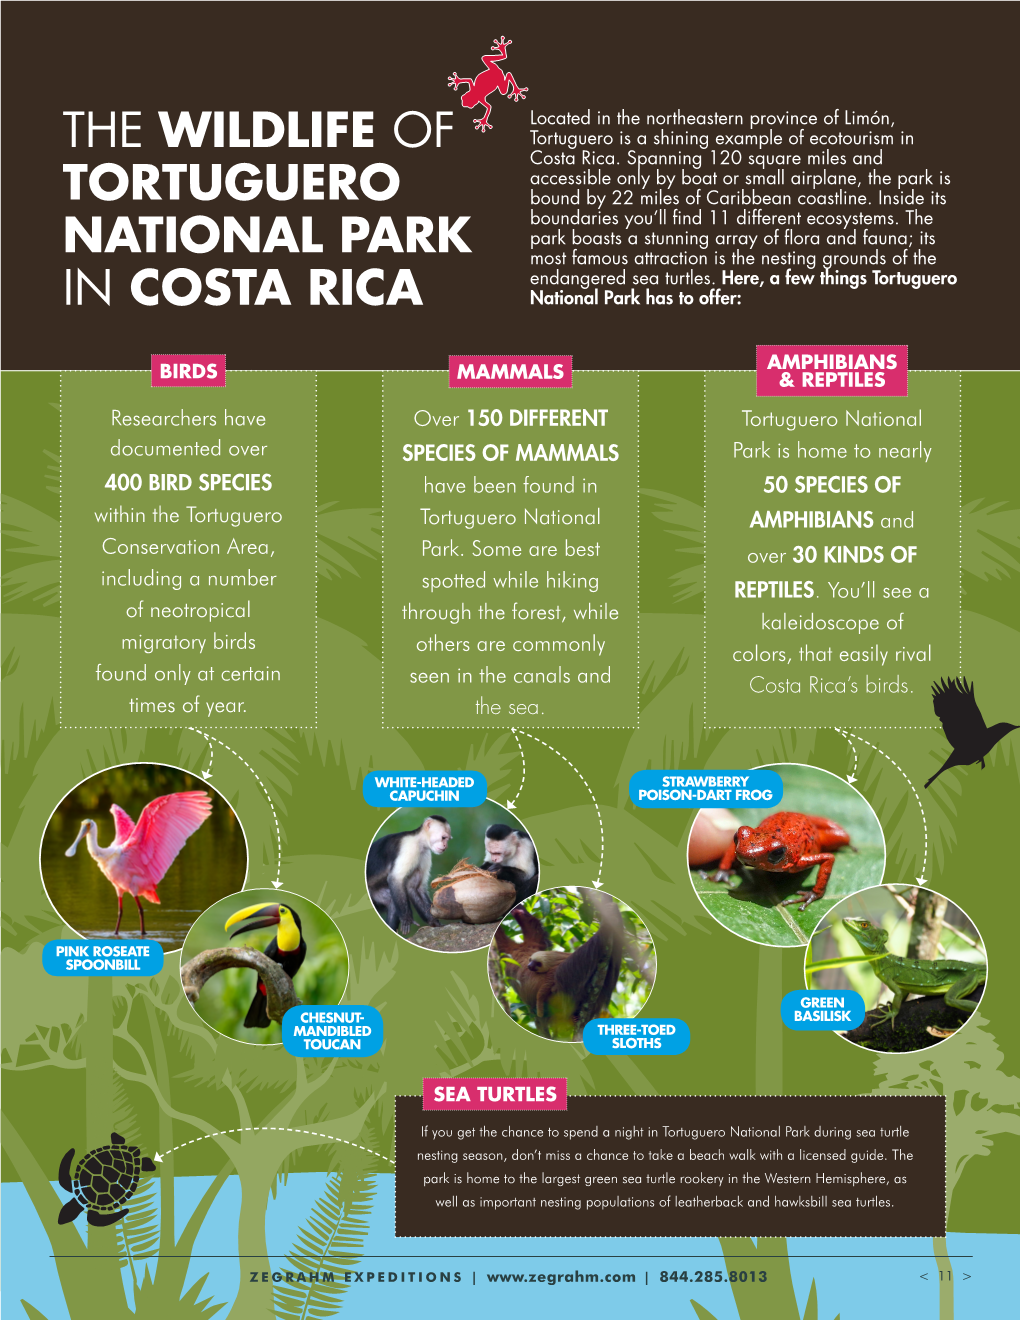 The Wildlife of Tortuguero National Park in Costa Rica